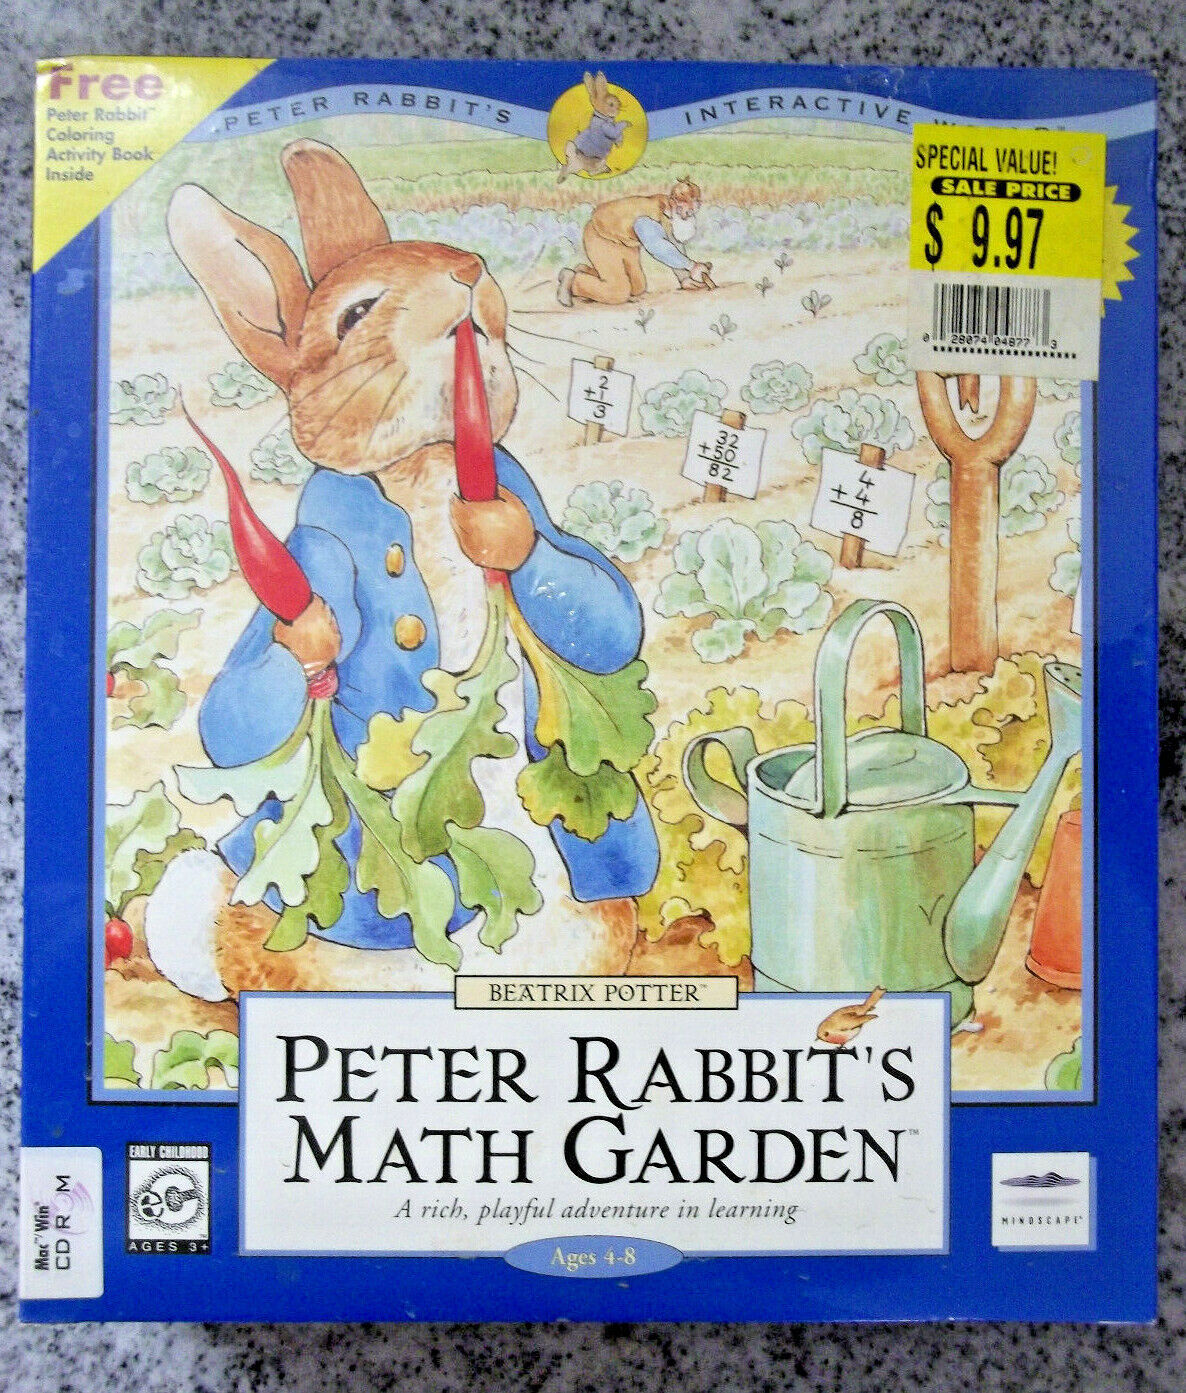 Peter Rabbit\'s Math Garden, Beatrix Potter, Mindscape, CD-ROM, 1996, NIB sealed